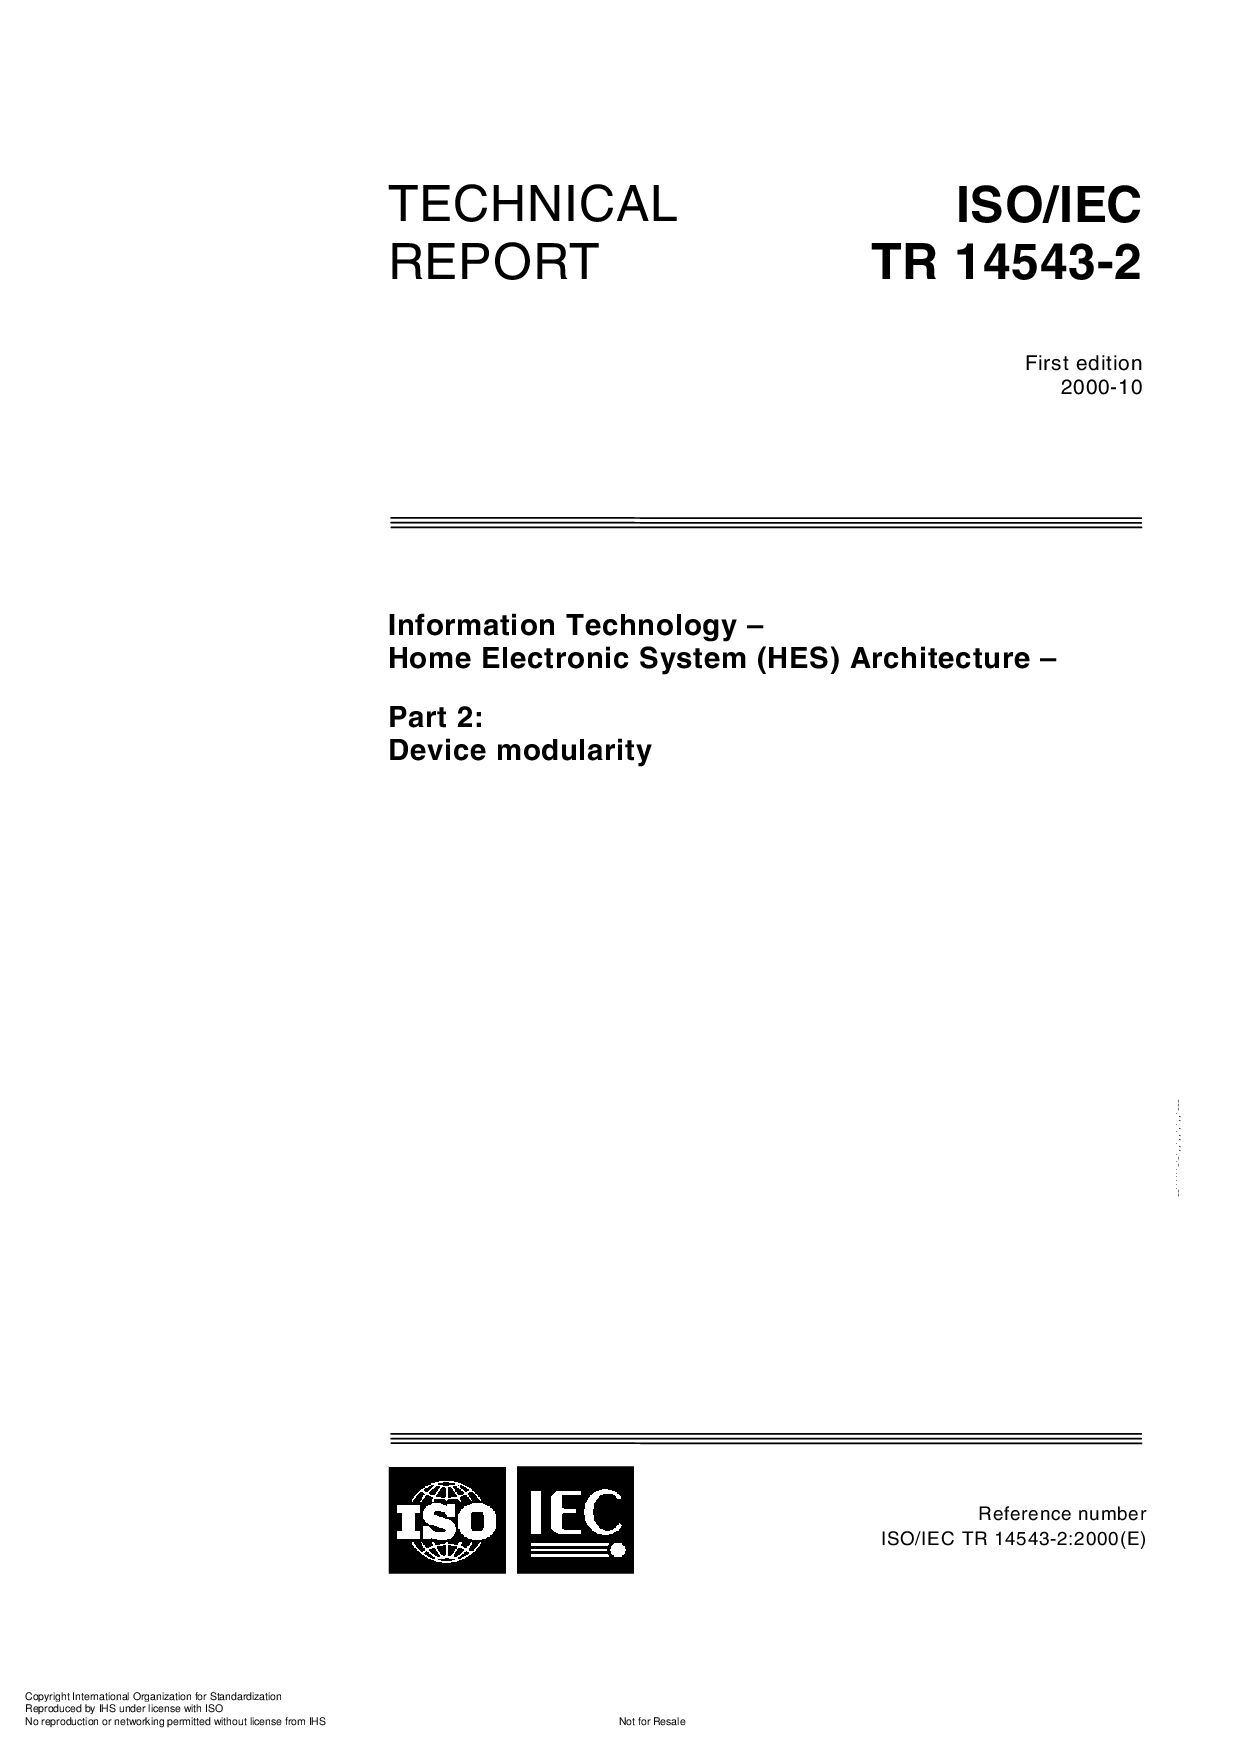 ISO/IEC TR 14543-2:2000